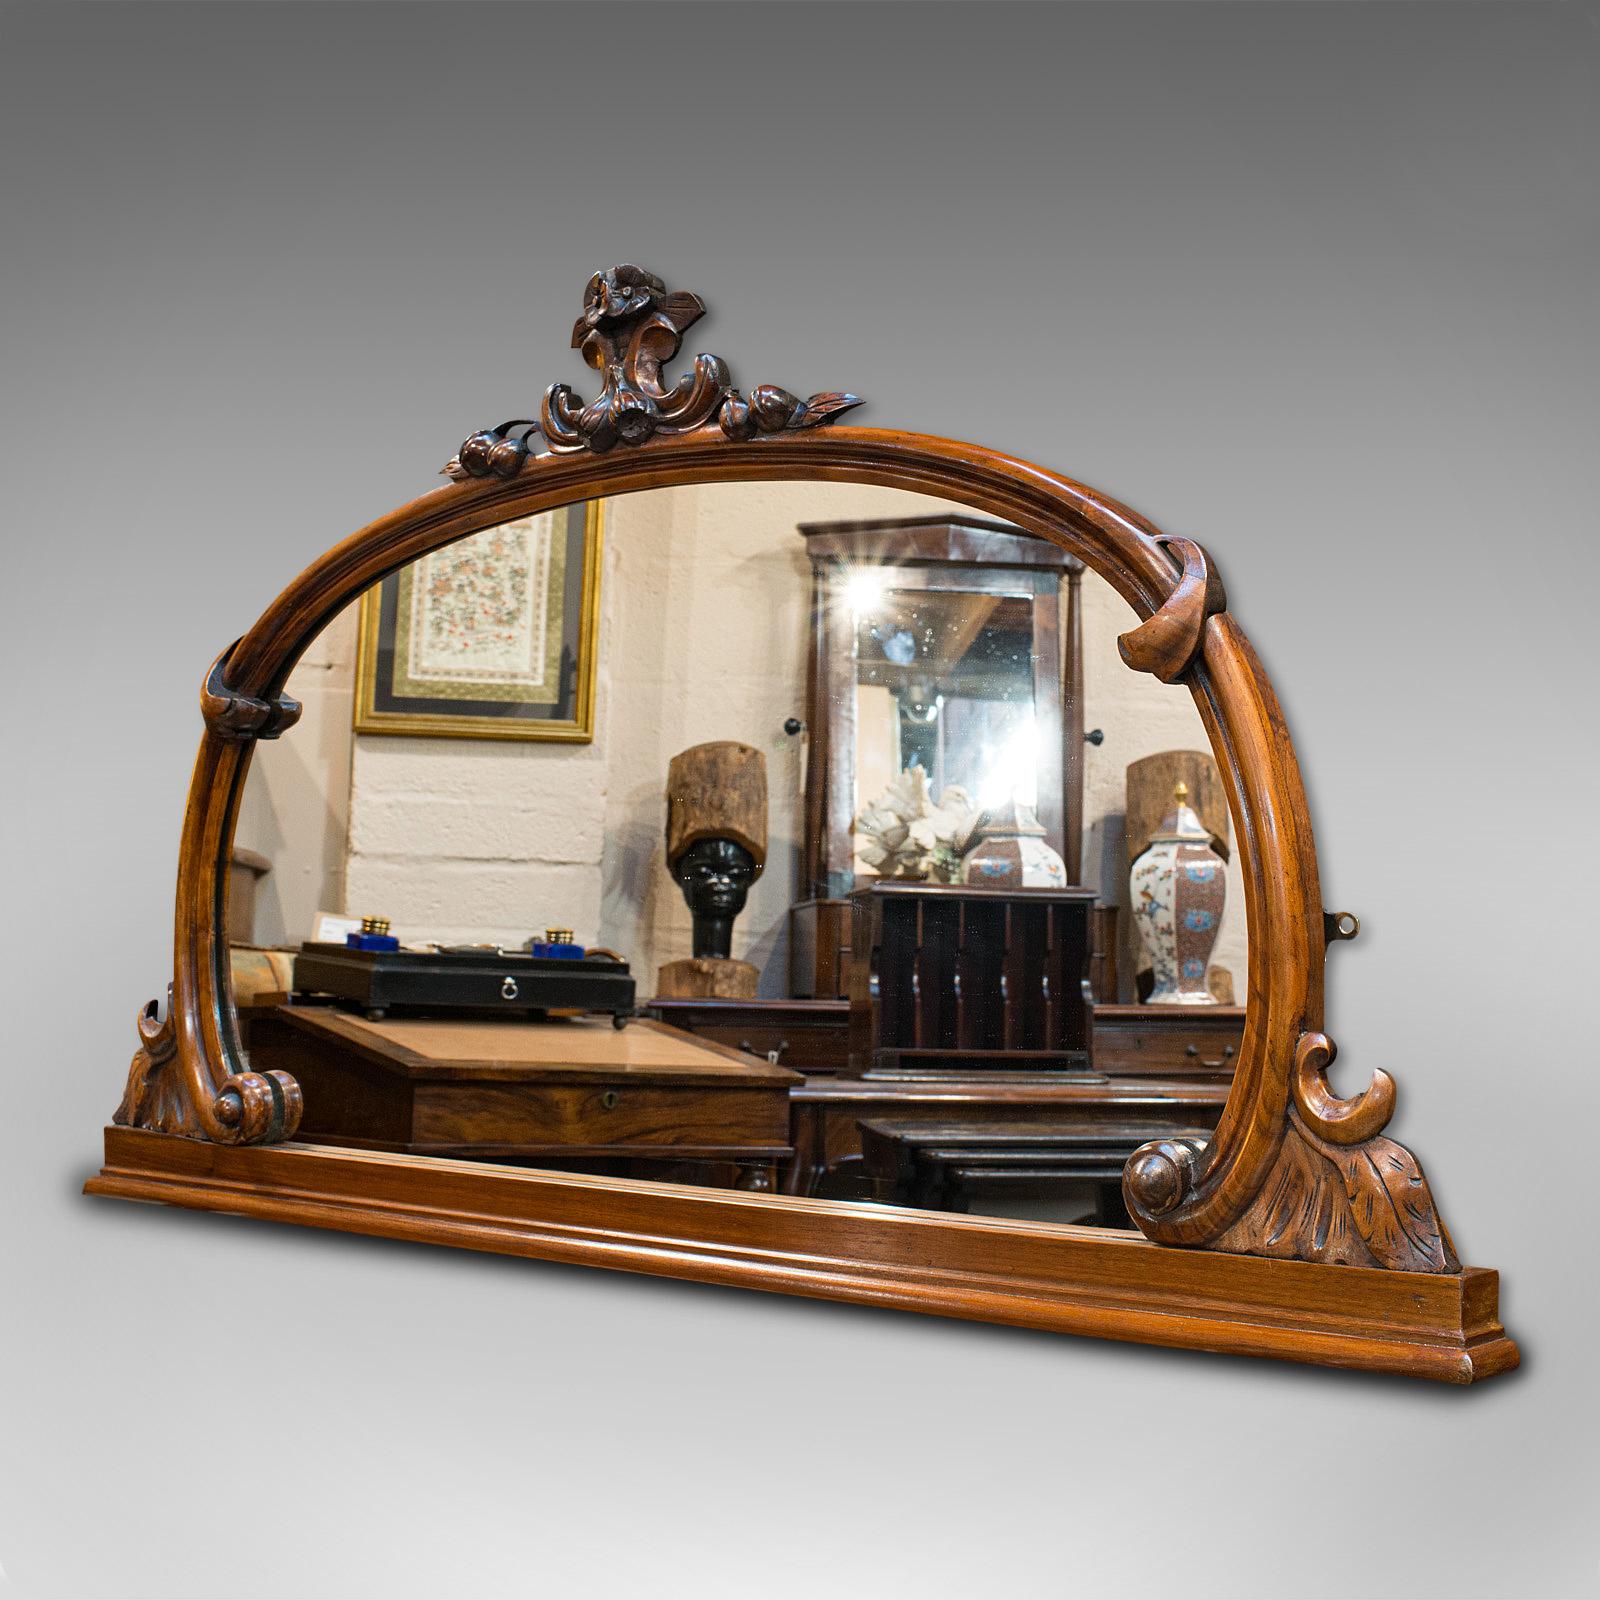 British Antique Overmantel Mirror, English, Walnut, Glass, Hall, Victorian, circa 1860